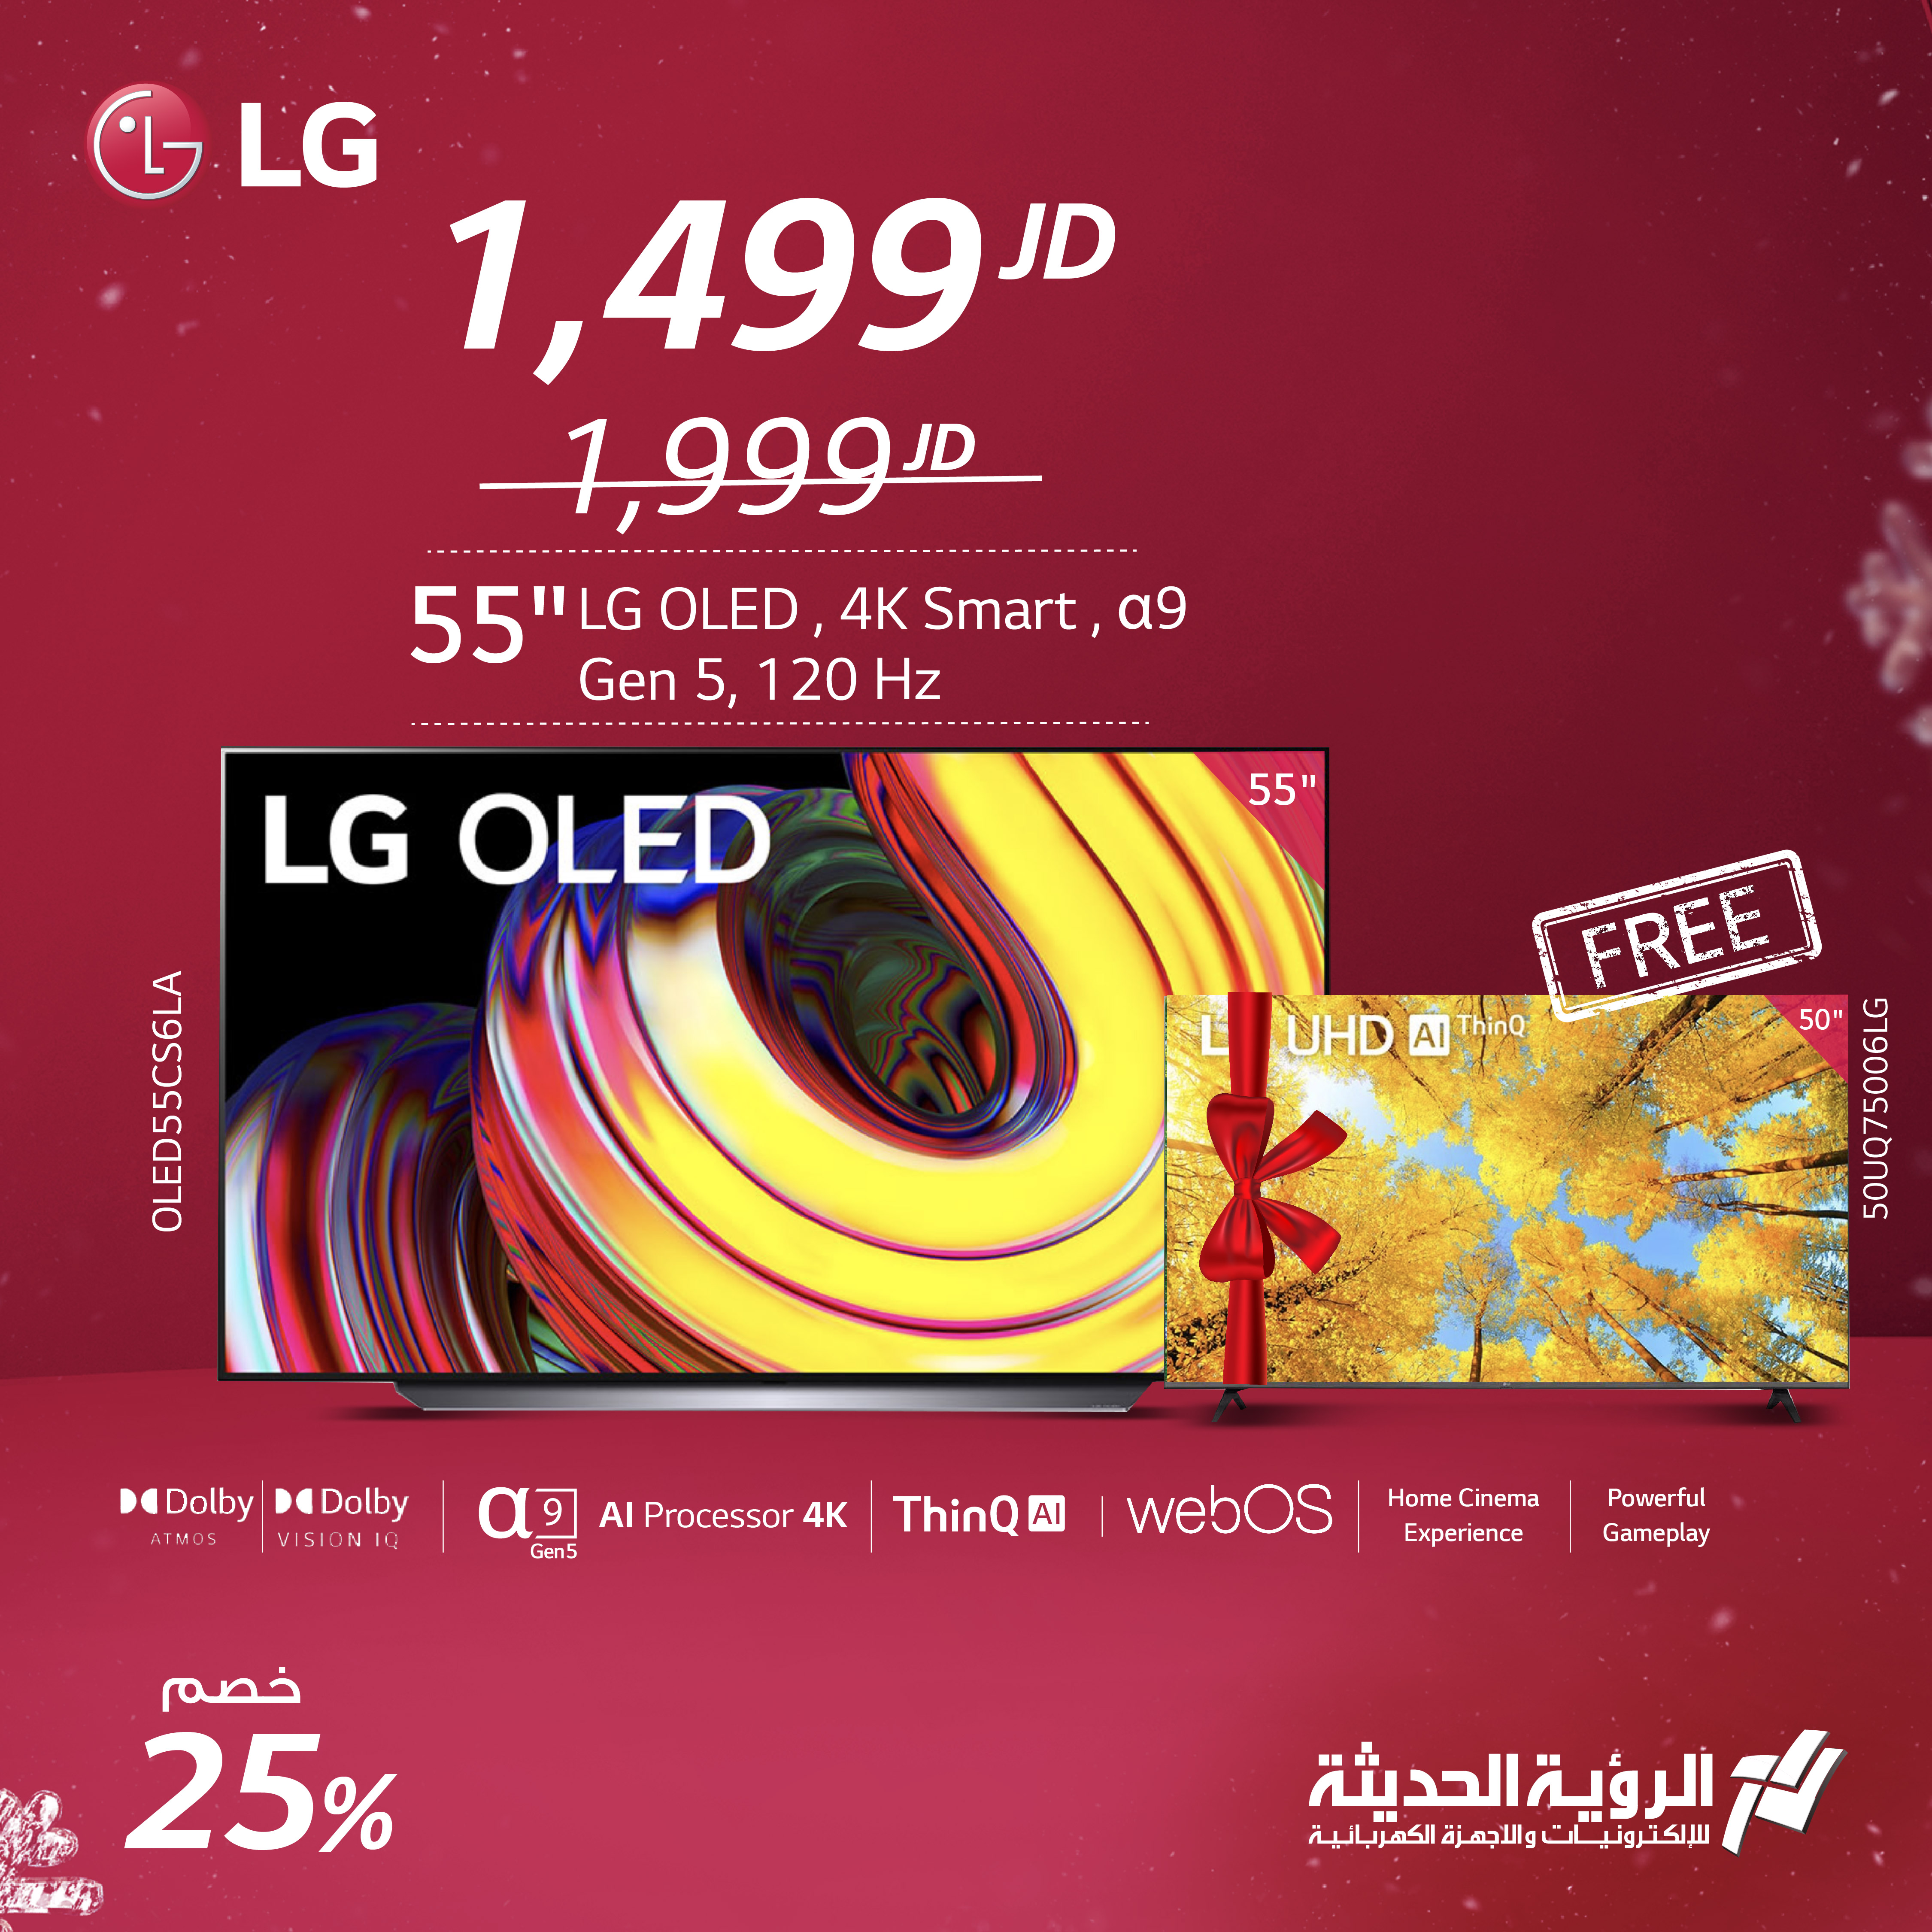 LG 55" OLED CS TV 4K with Free LG 50" UHD TV